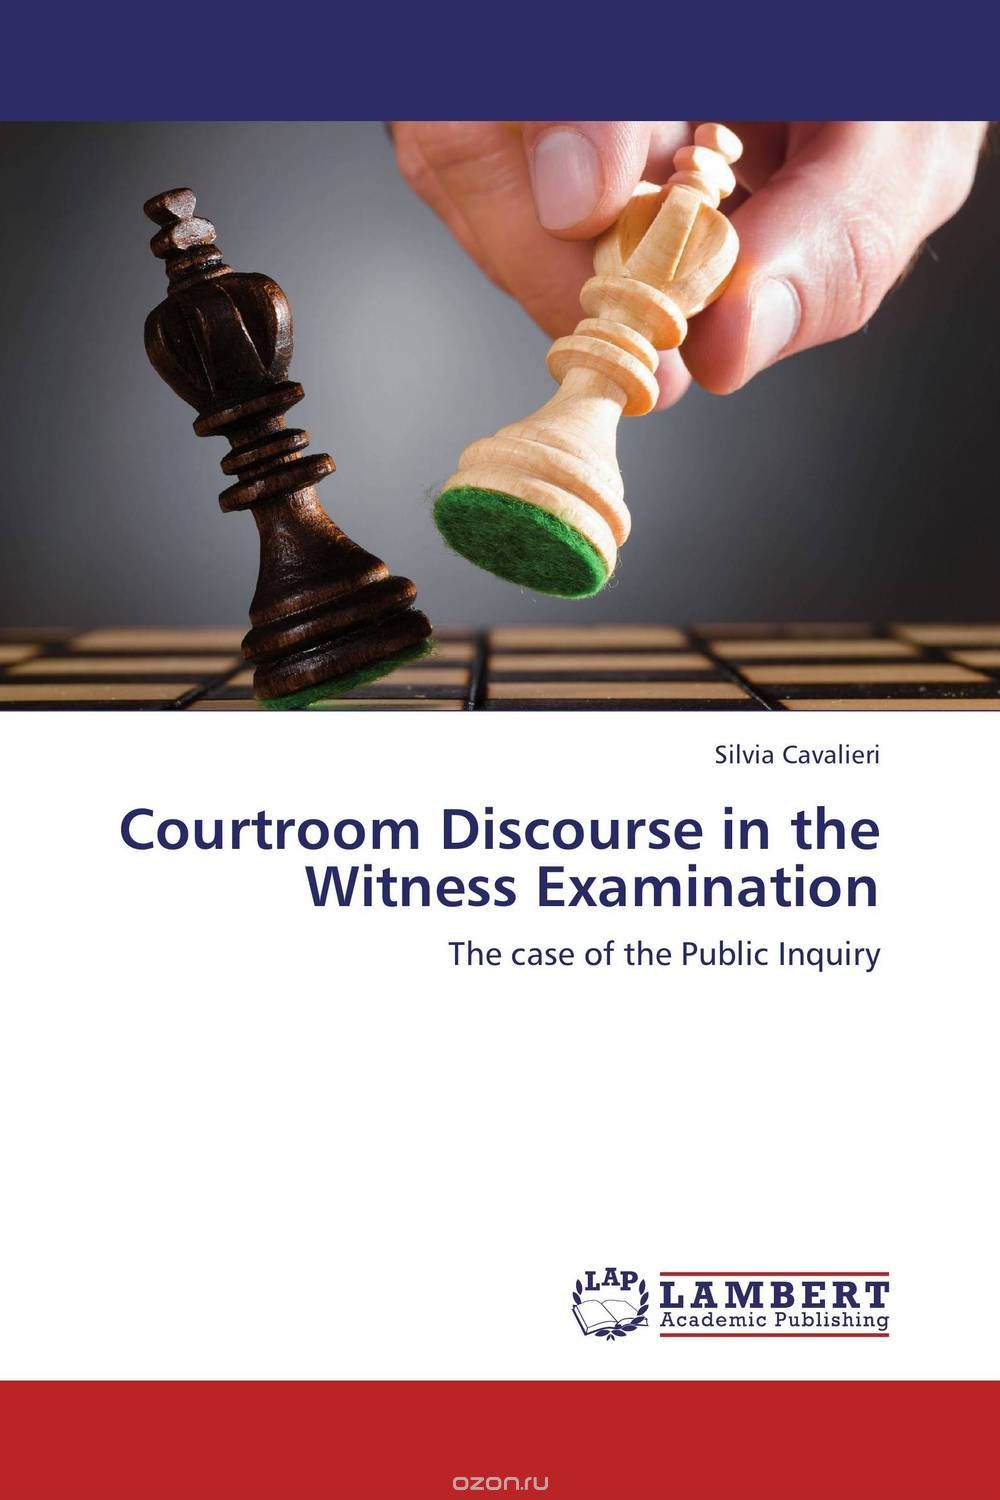 Скачать книгу "Courtroom Discourse in the Witness Examination"